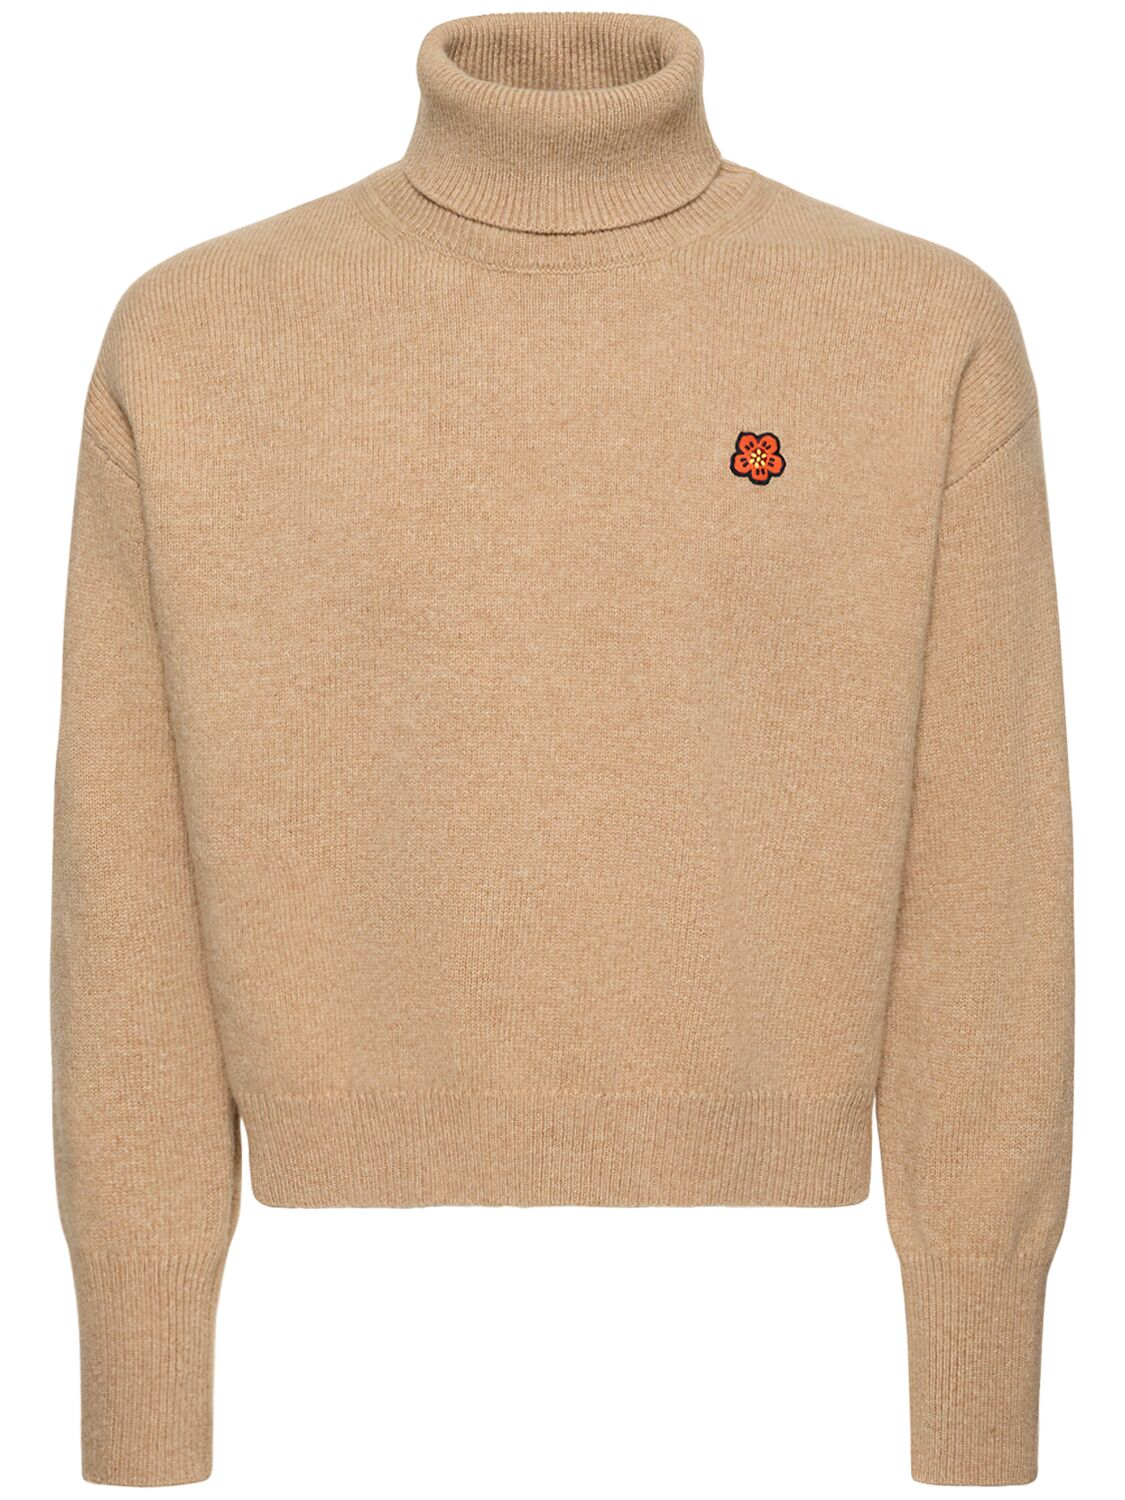 Image of Crest Boxy Turtleneck Wool Sweater